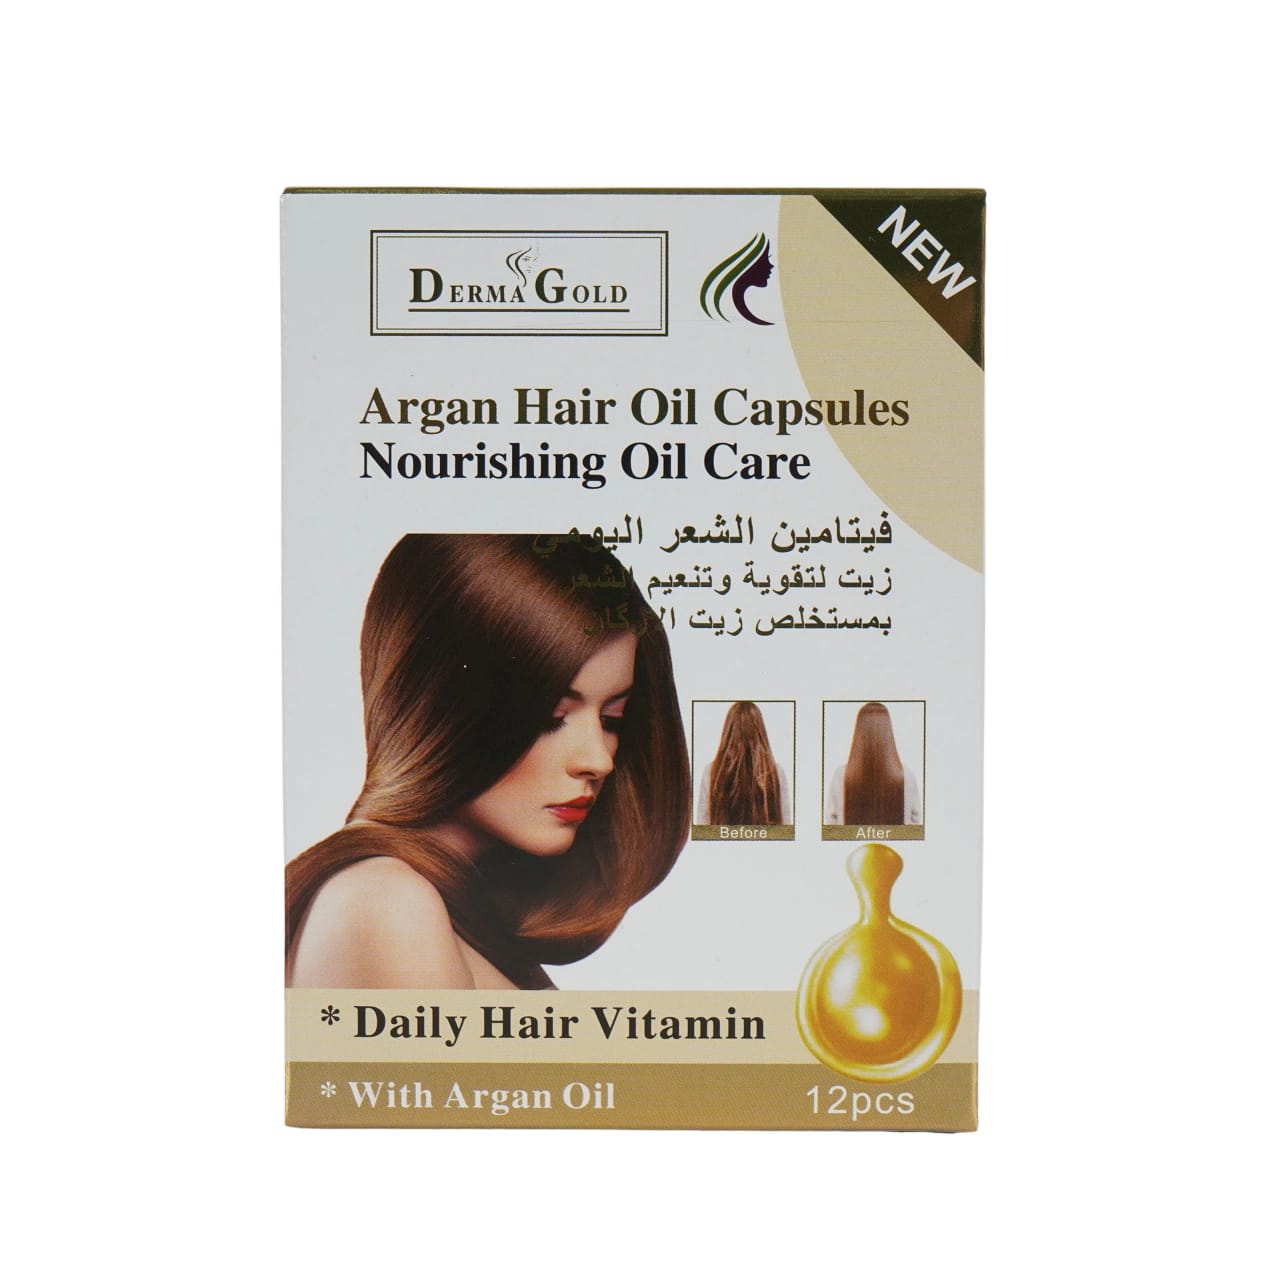 Derma Gold Argan Hair Oil Capsules Nourishing Oil Care 12pcs